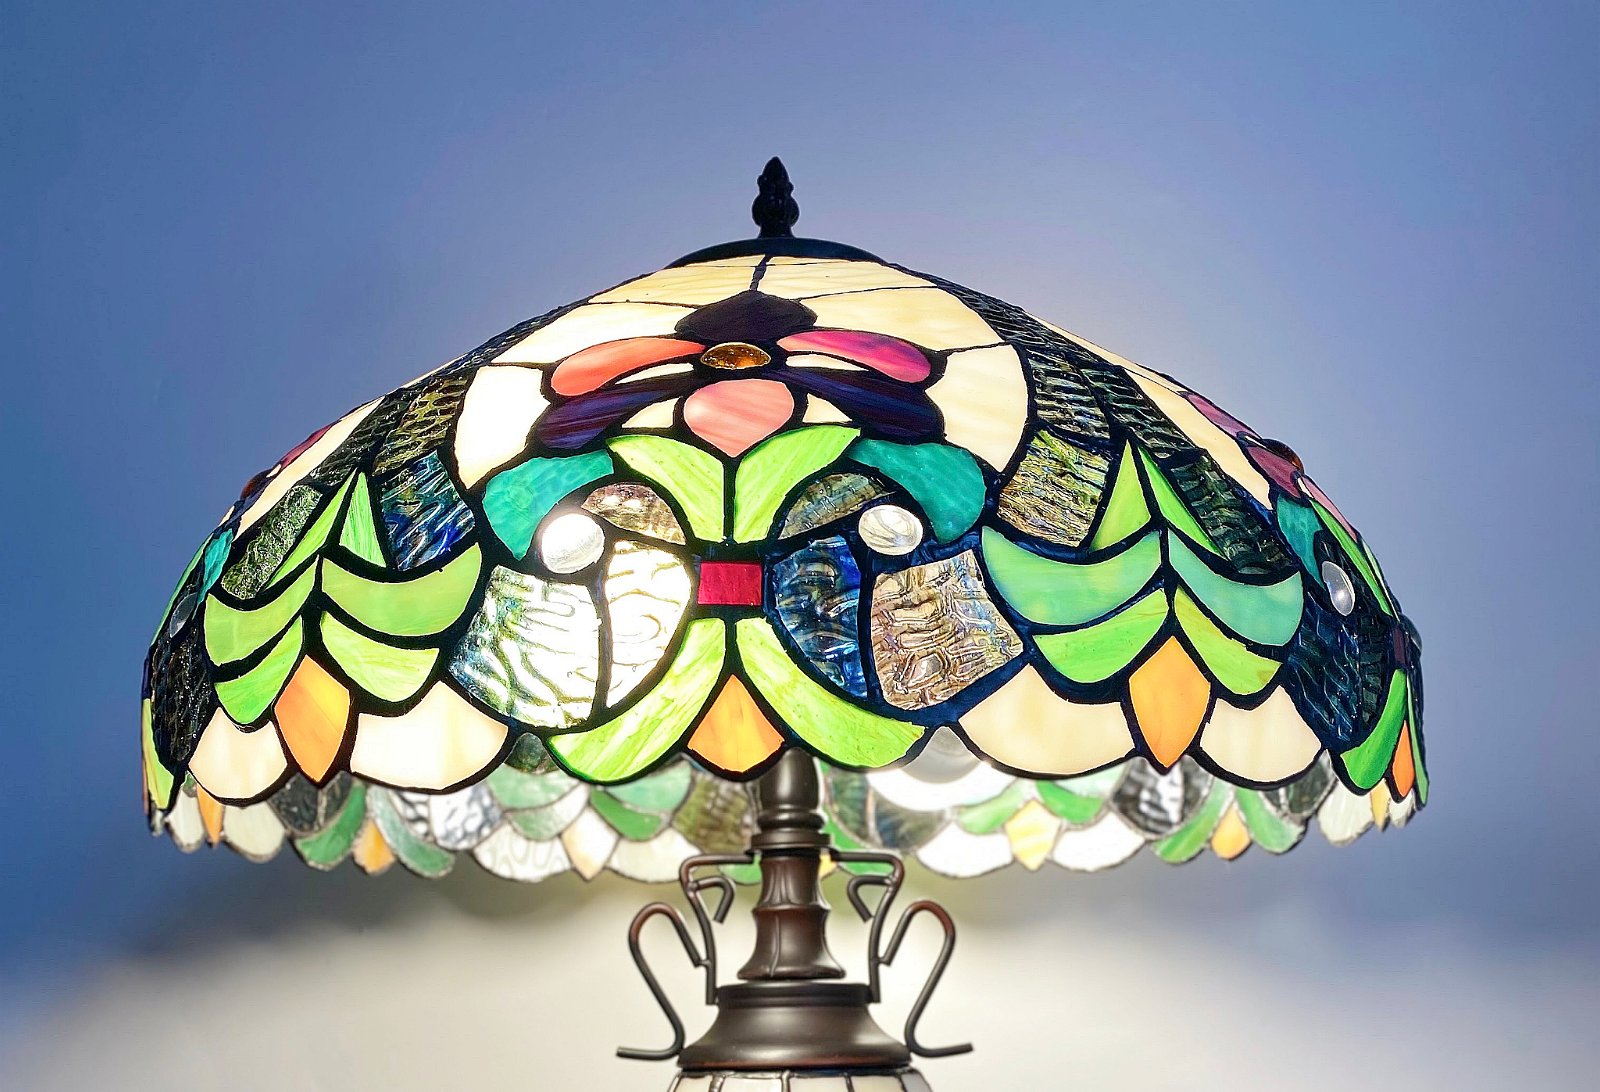 Multicoloured Double Tiffany Lamp 68cm